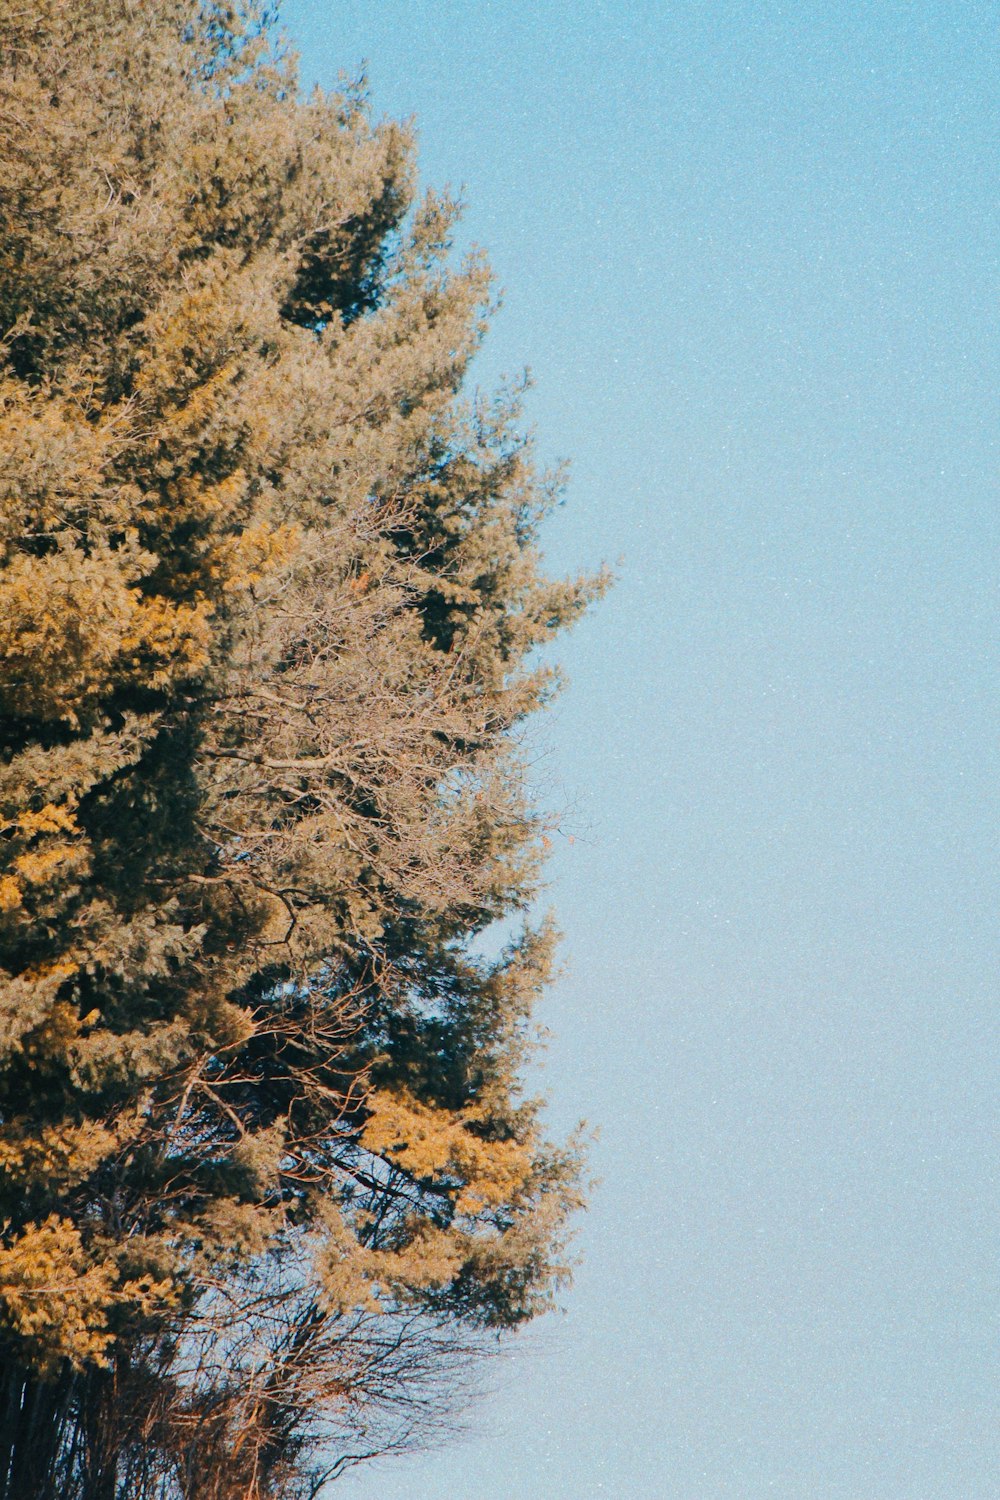 a bird flying in the sky near a tree